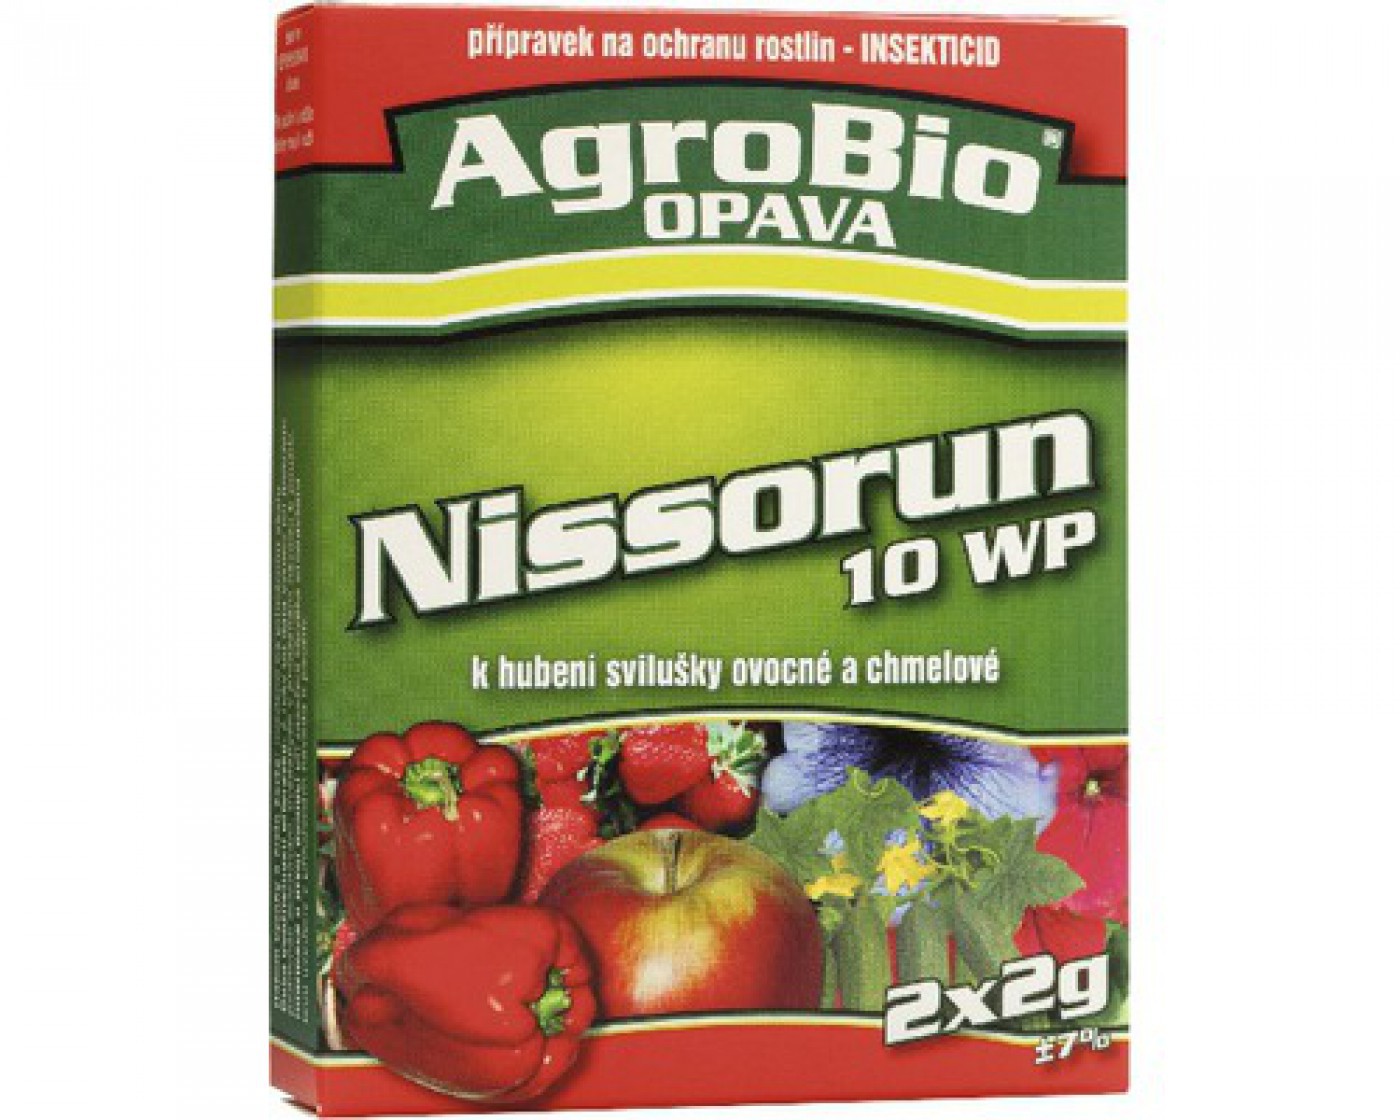 Nissorun 10WP 2x2g